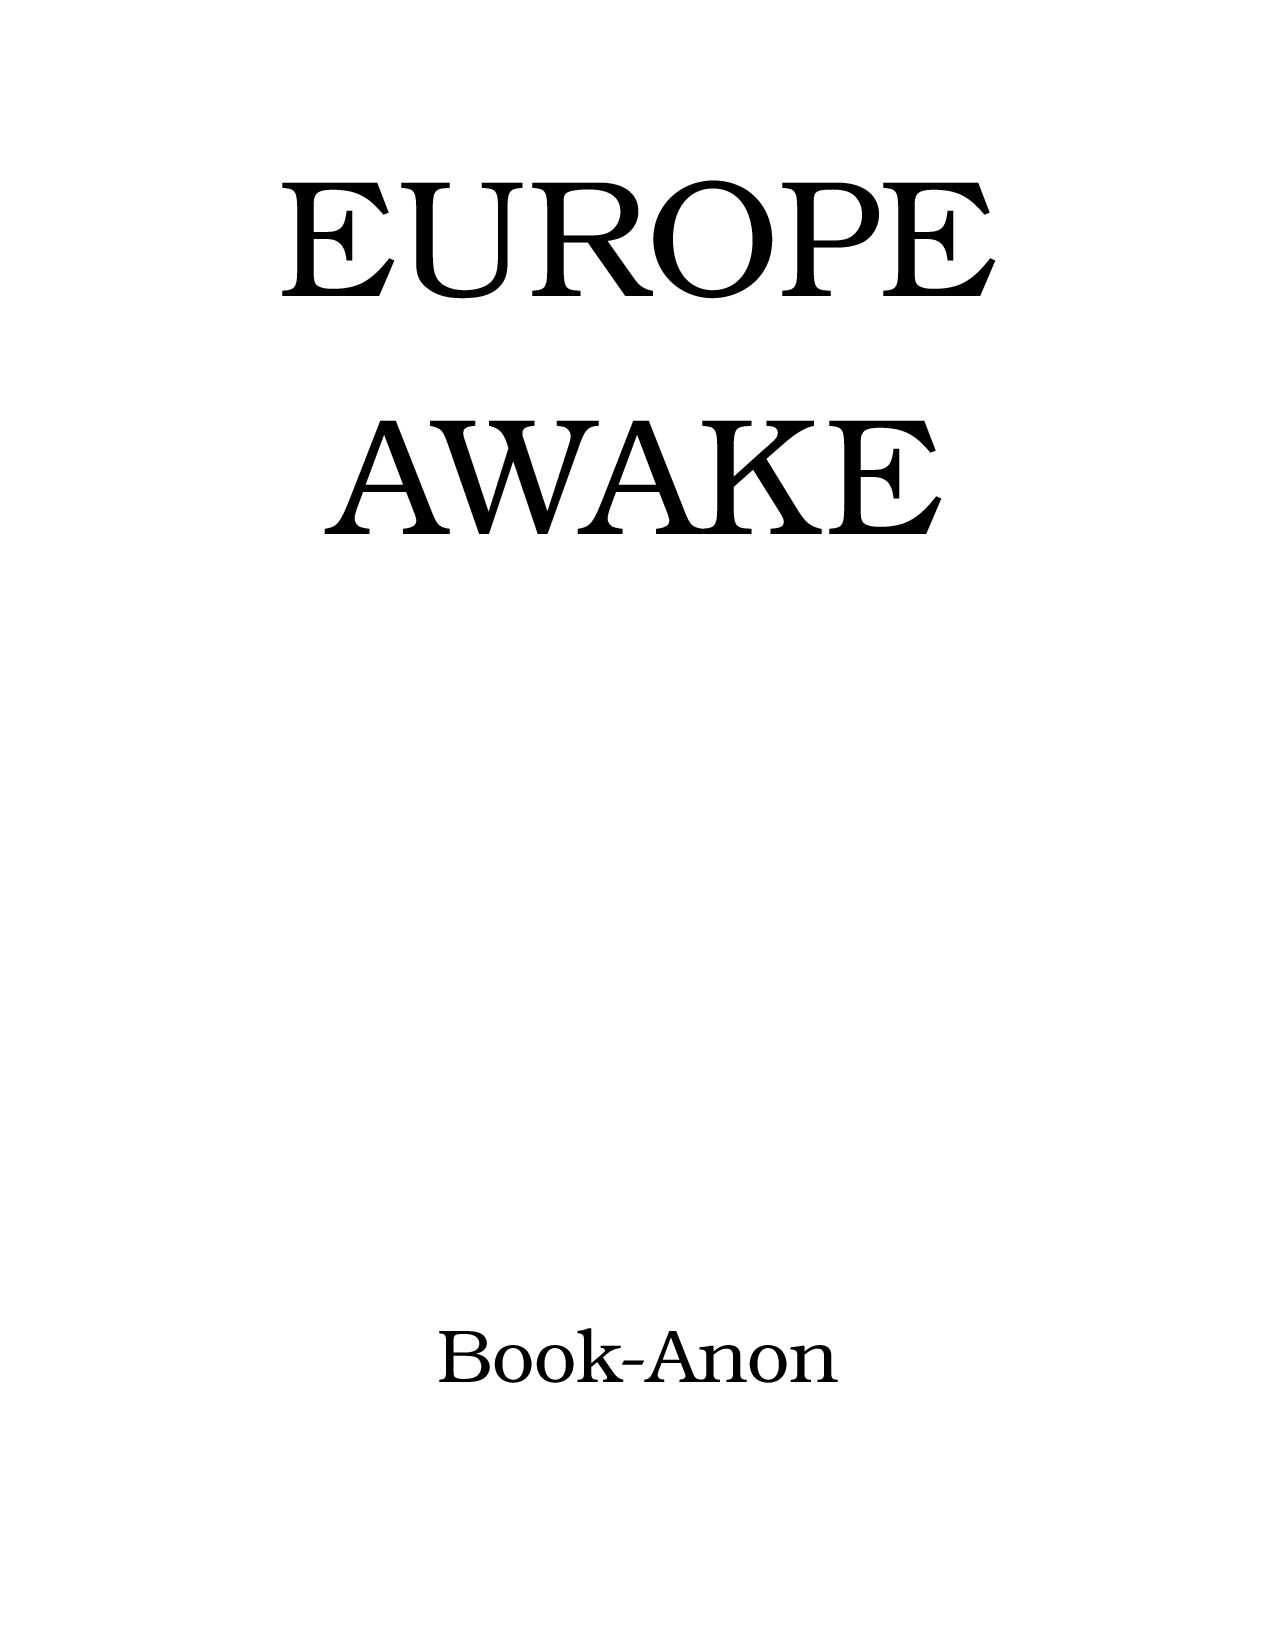 Book-Anon; Europe Awake